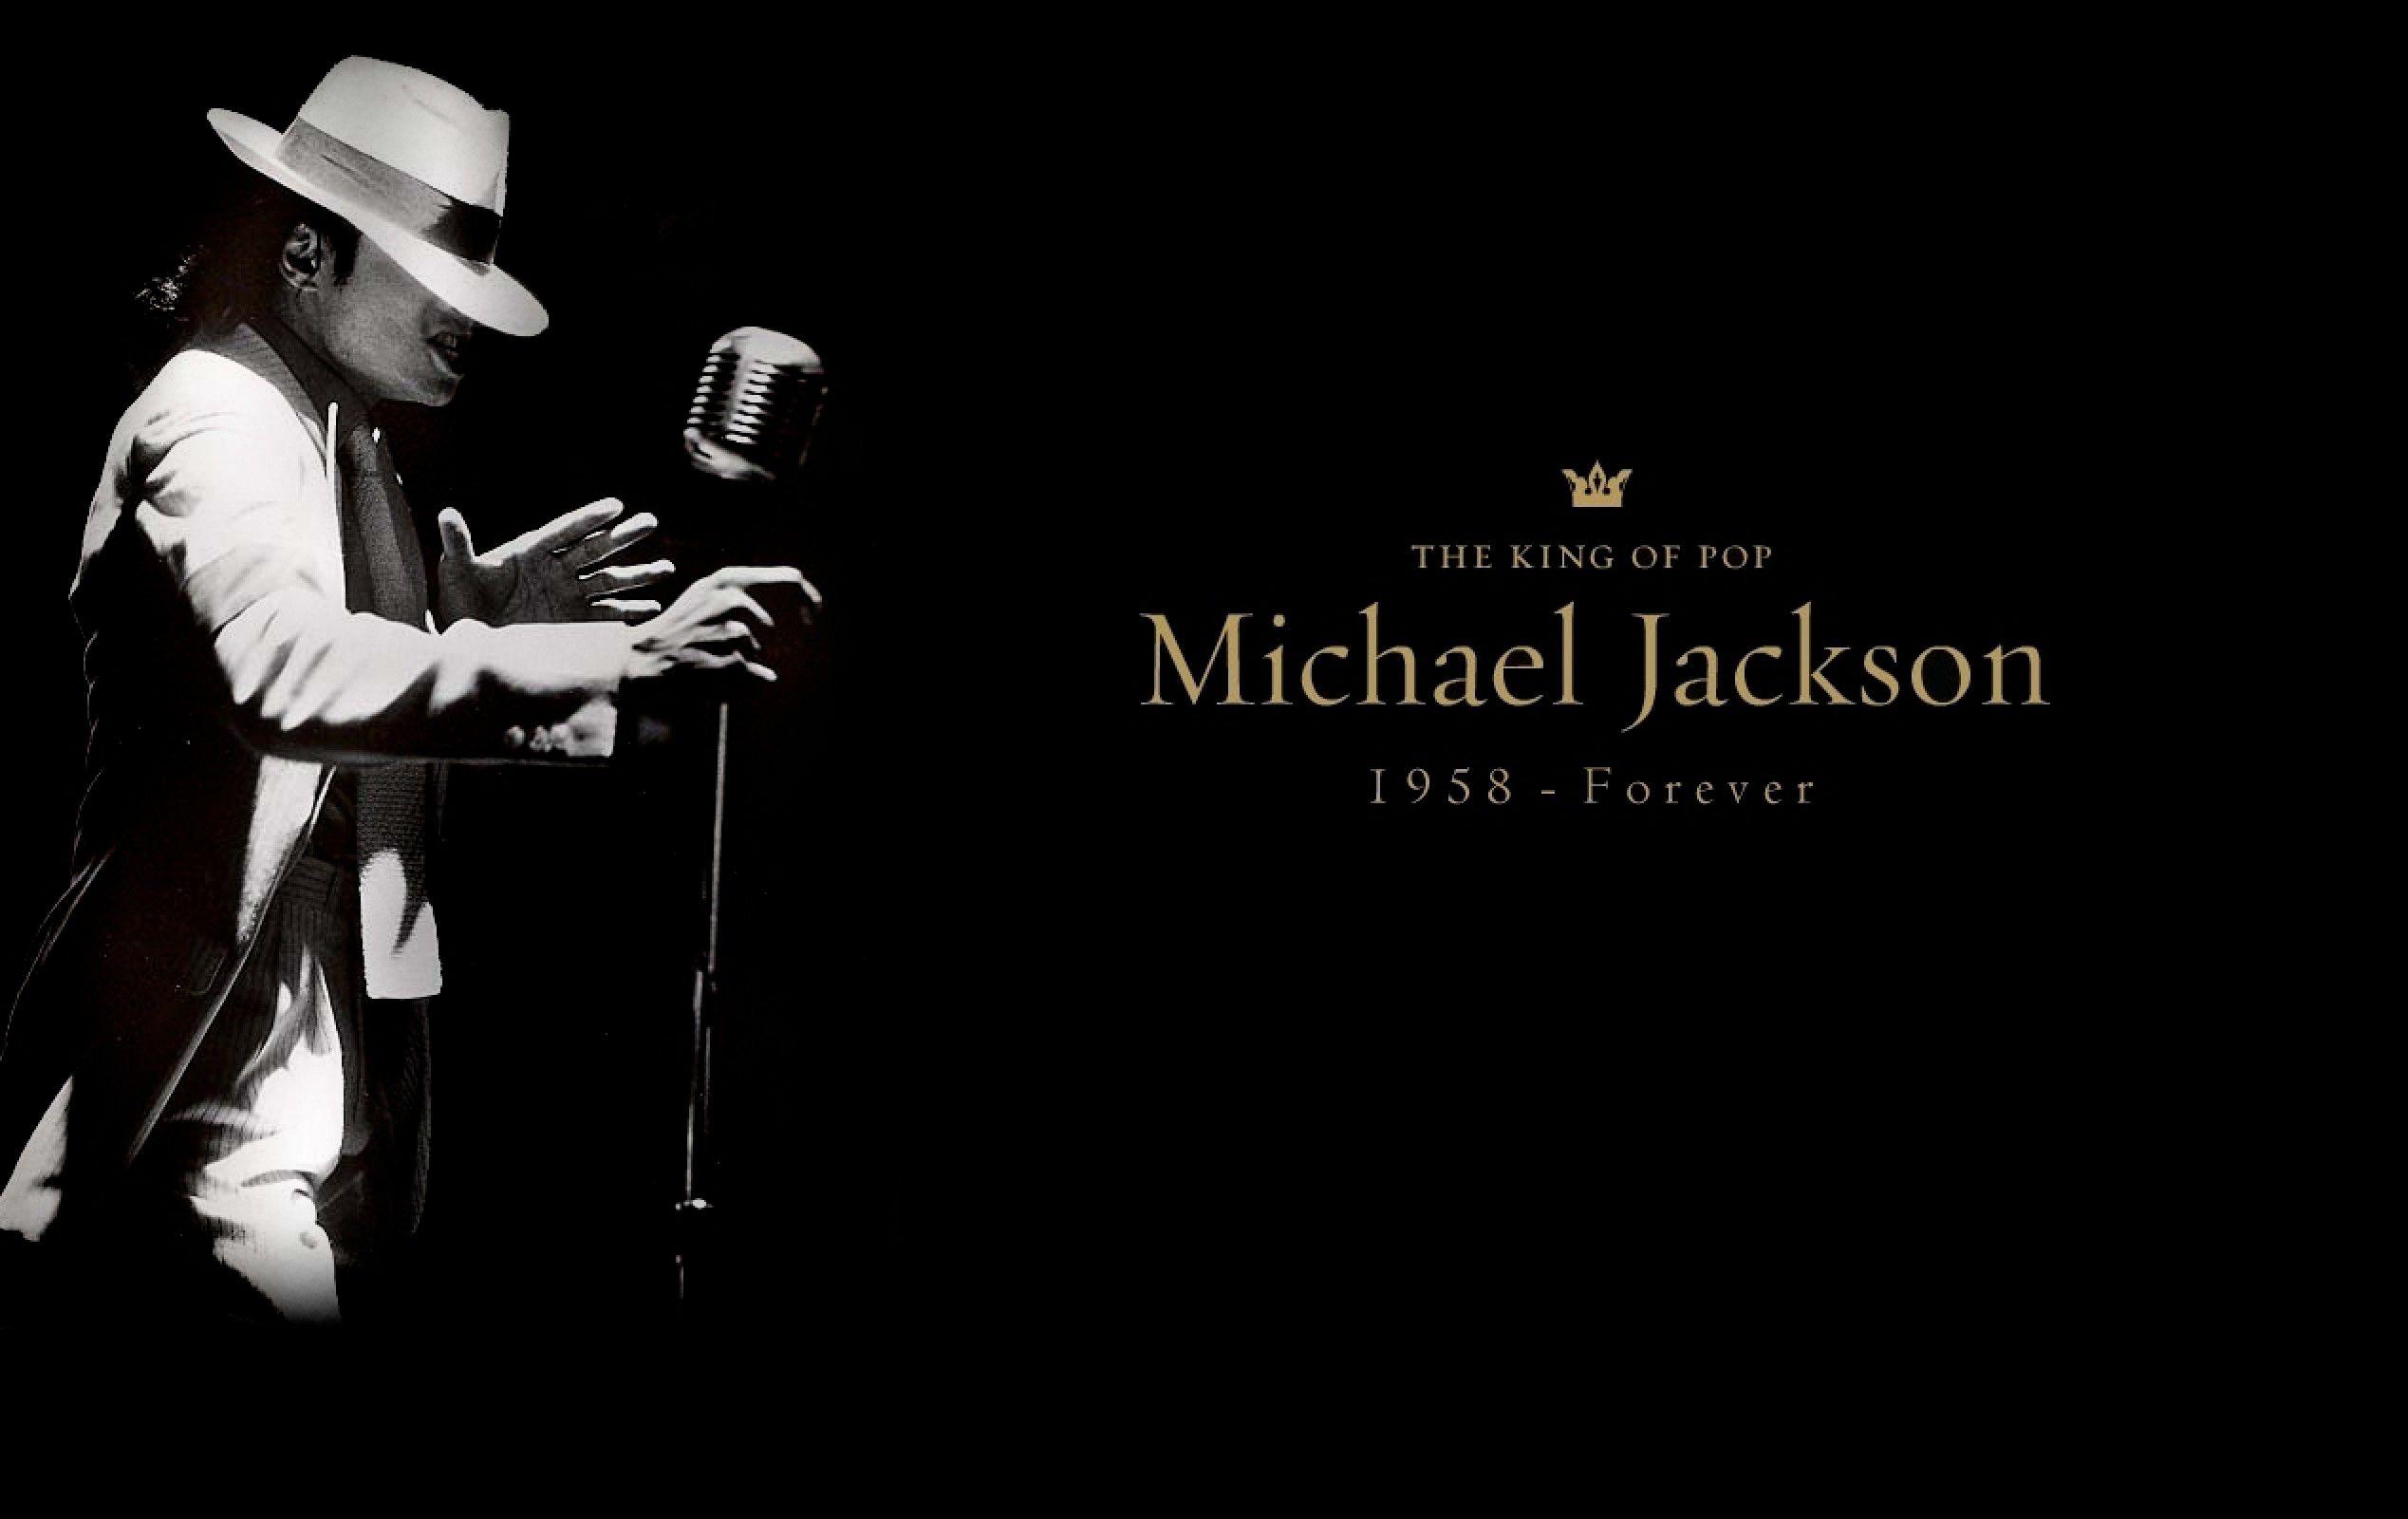 Michael Jackson HD wallpaper \u2022 PoPoPics.com. Image